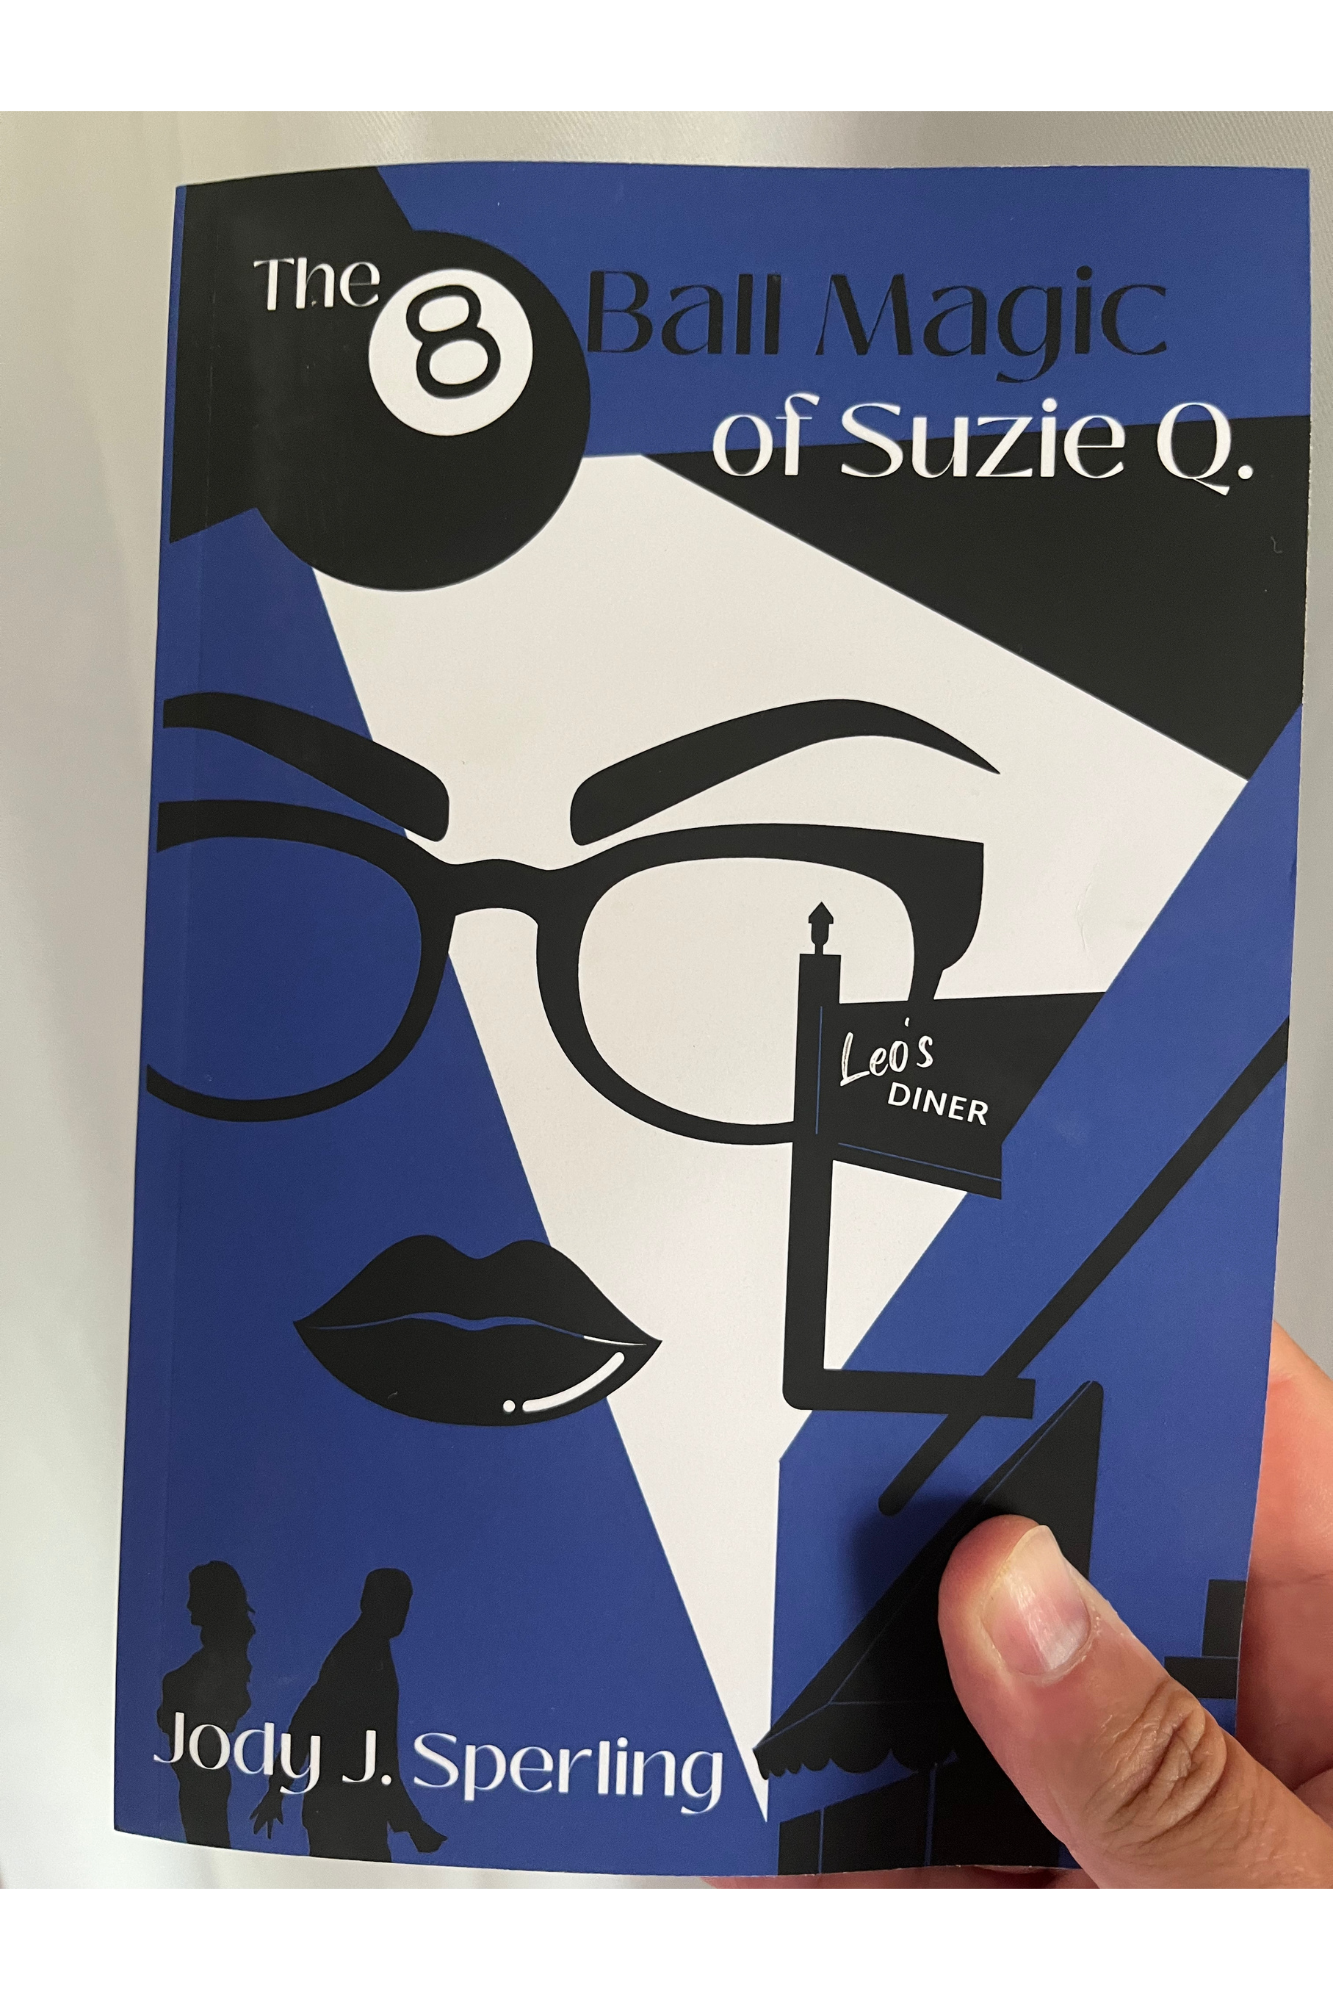 Book 2 - The 8 Ball Magic of Suzie Q. (Paperback)